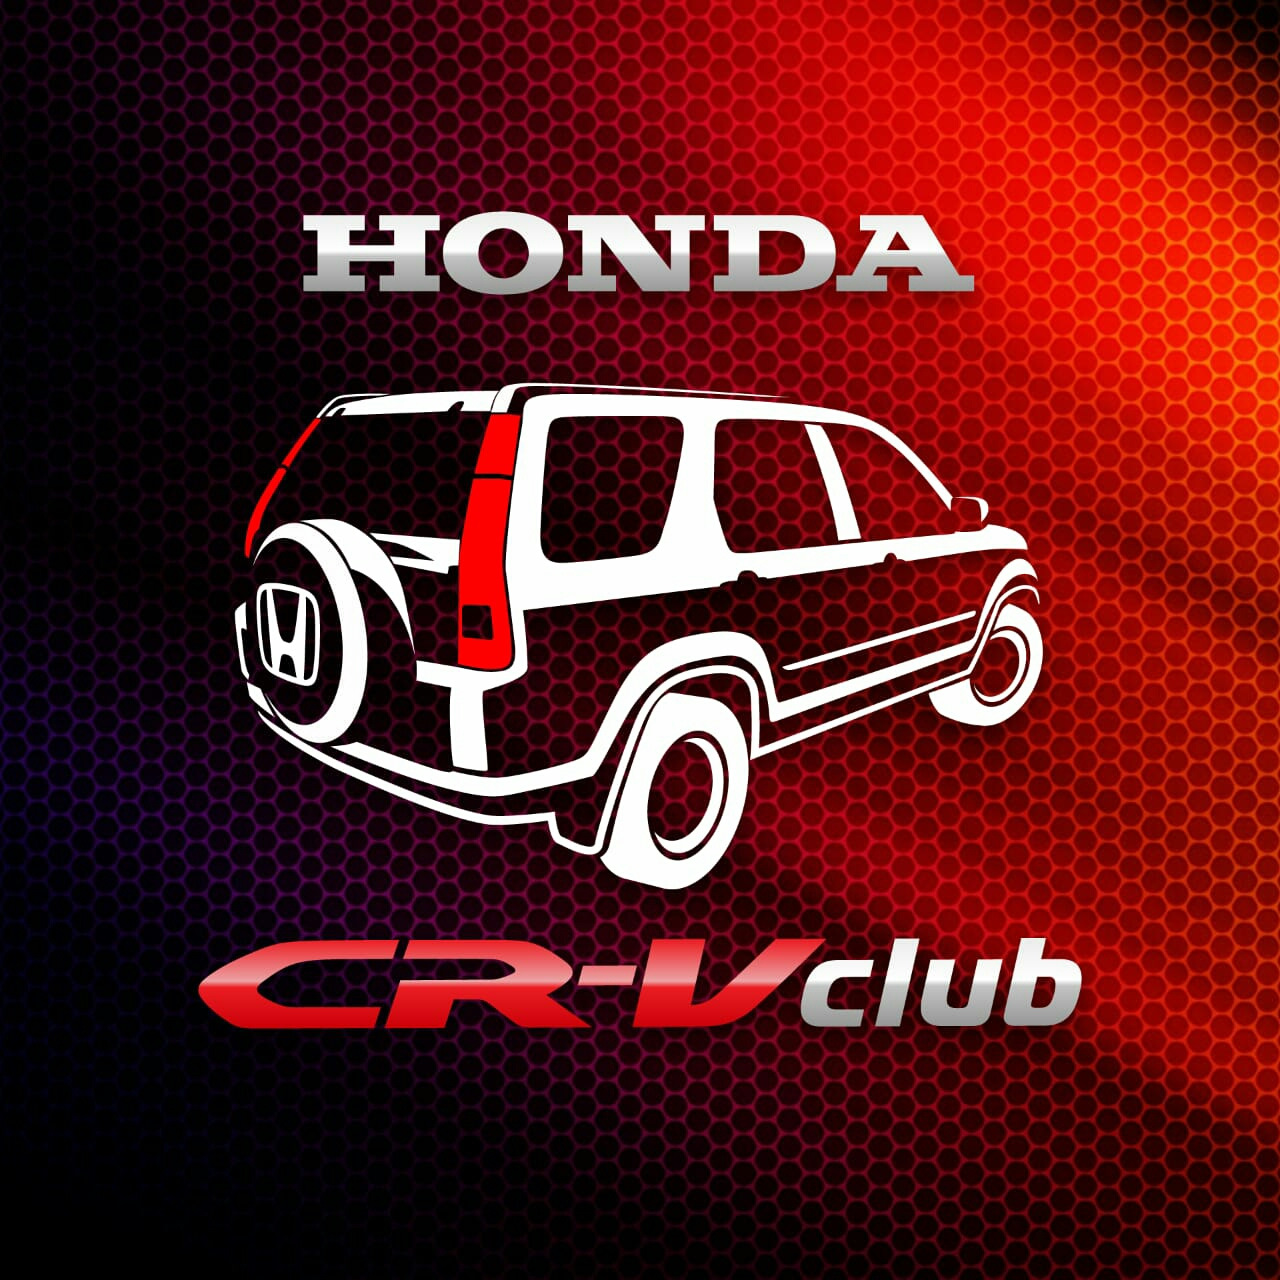 Honda CR-V club.